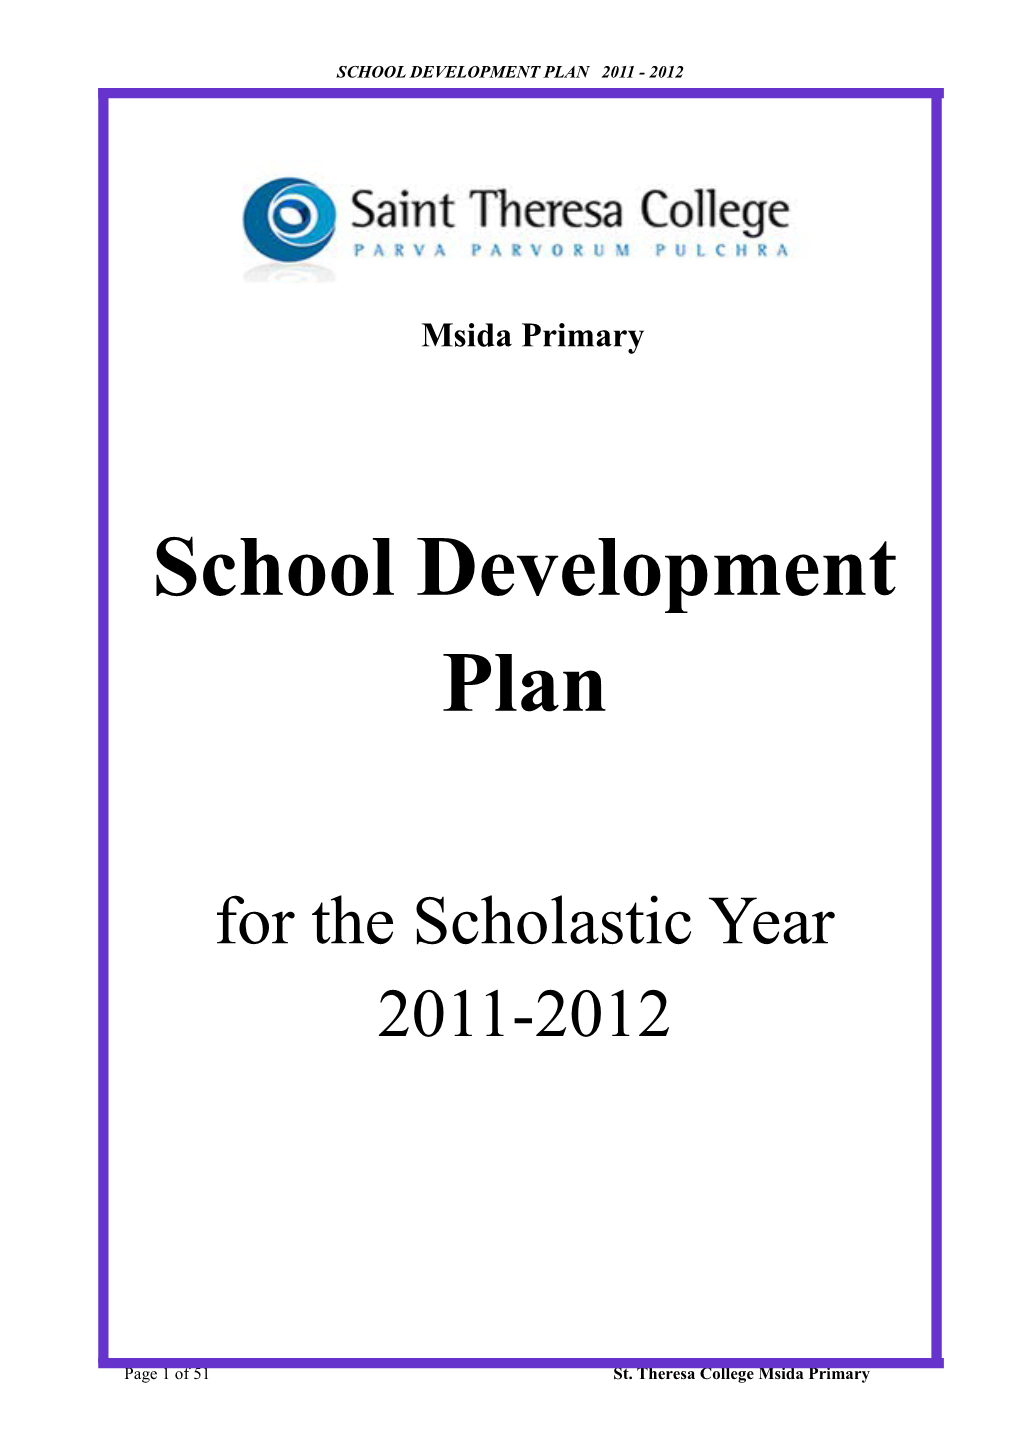 School Development Plan 2011 - 2012